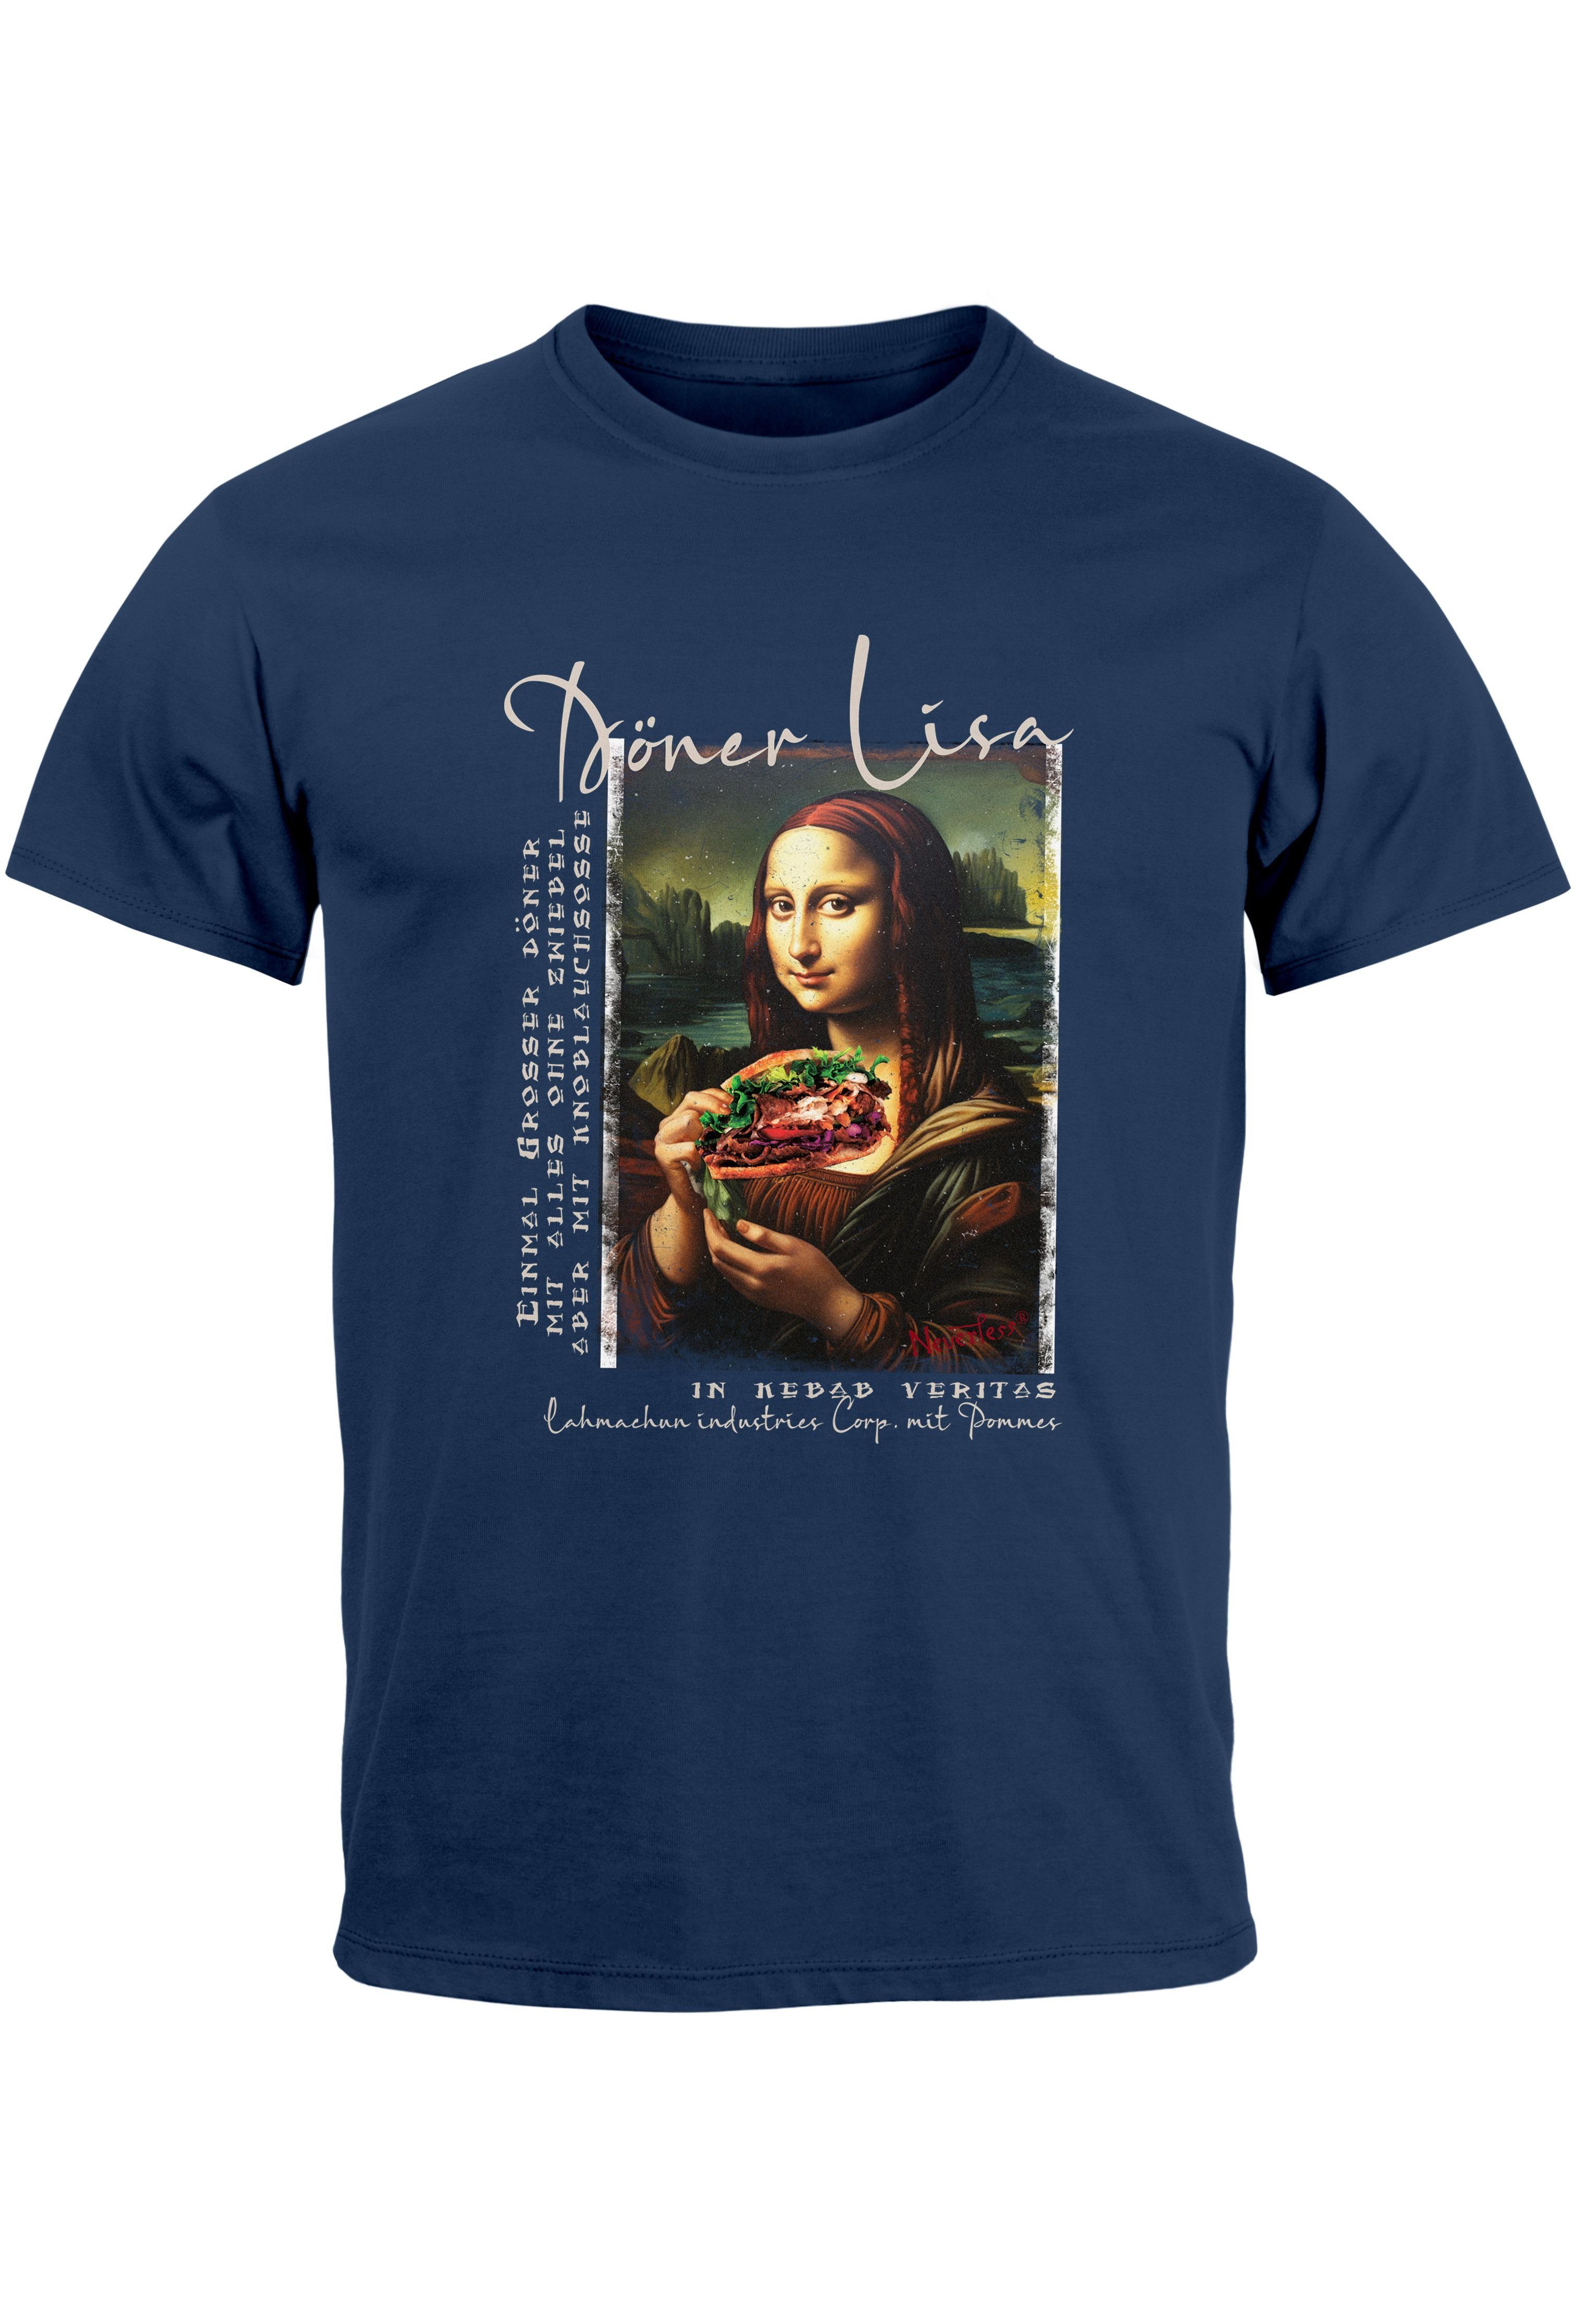 MoonWorks Print-Shirt Herren T-Shirt Print Aufdruck Mona Lisa Parodie Meme Kapuzen-Pullover mit Print Döner Lisa navy